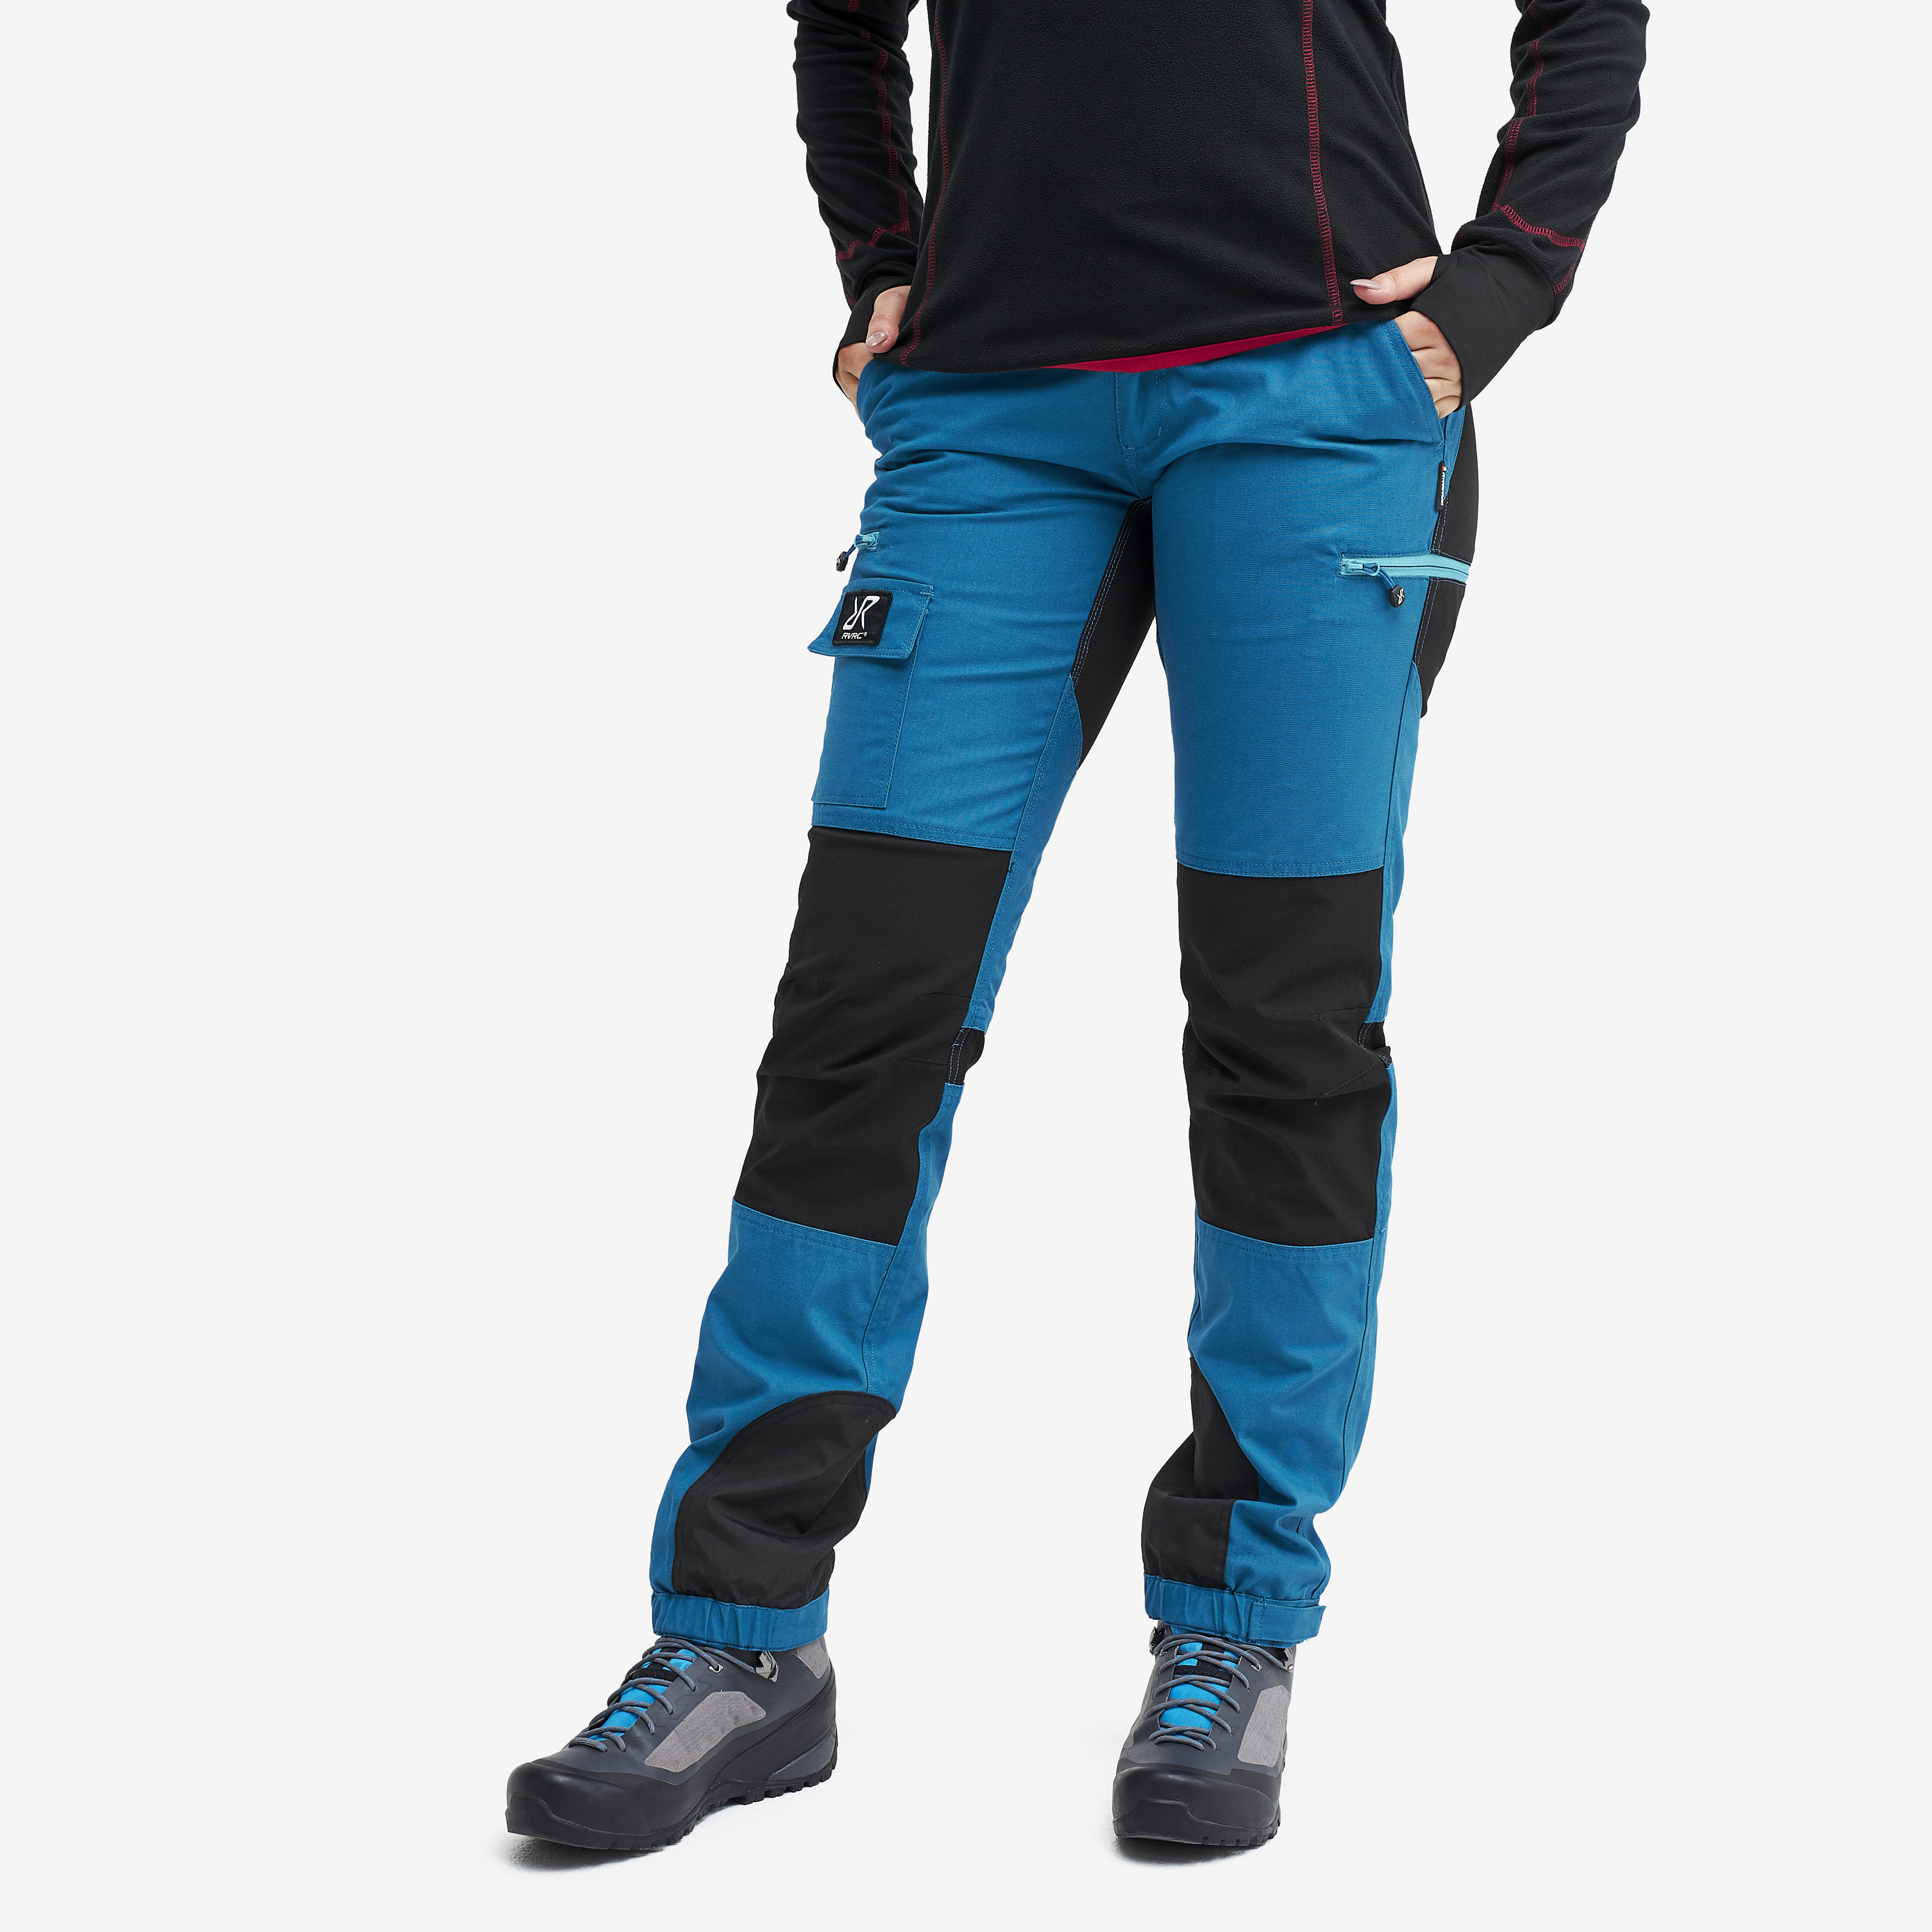 Nordwand walking trousers for women in blue